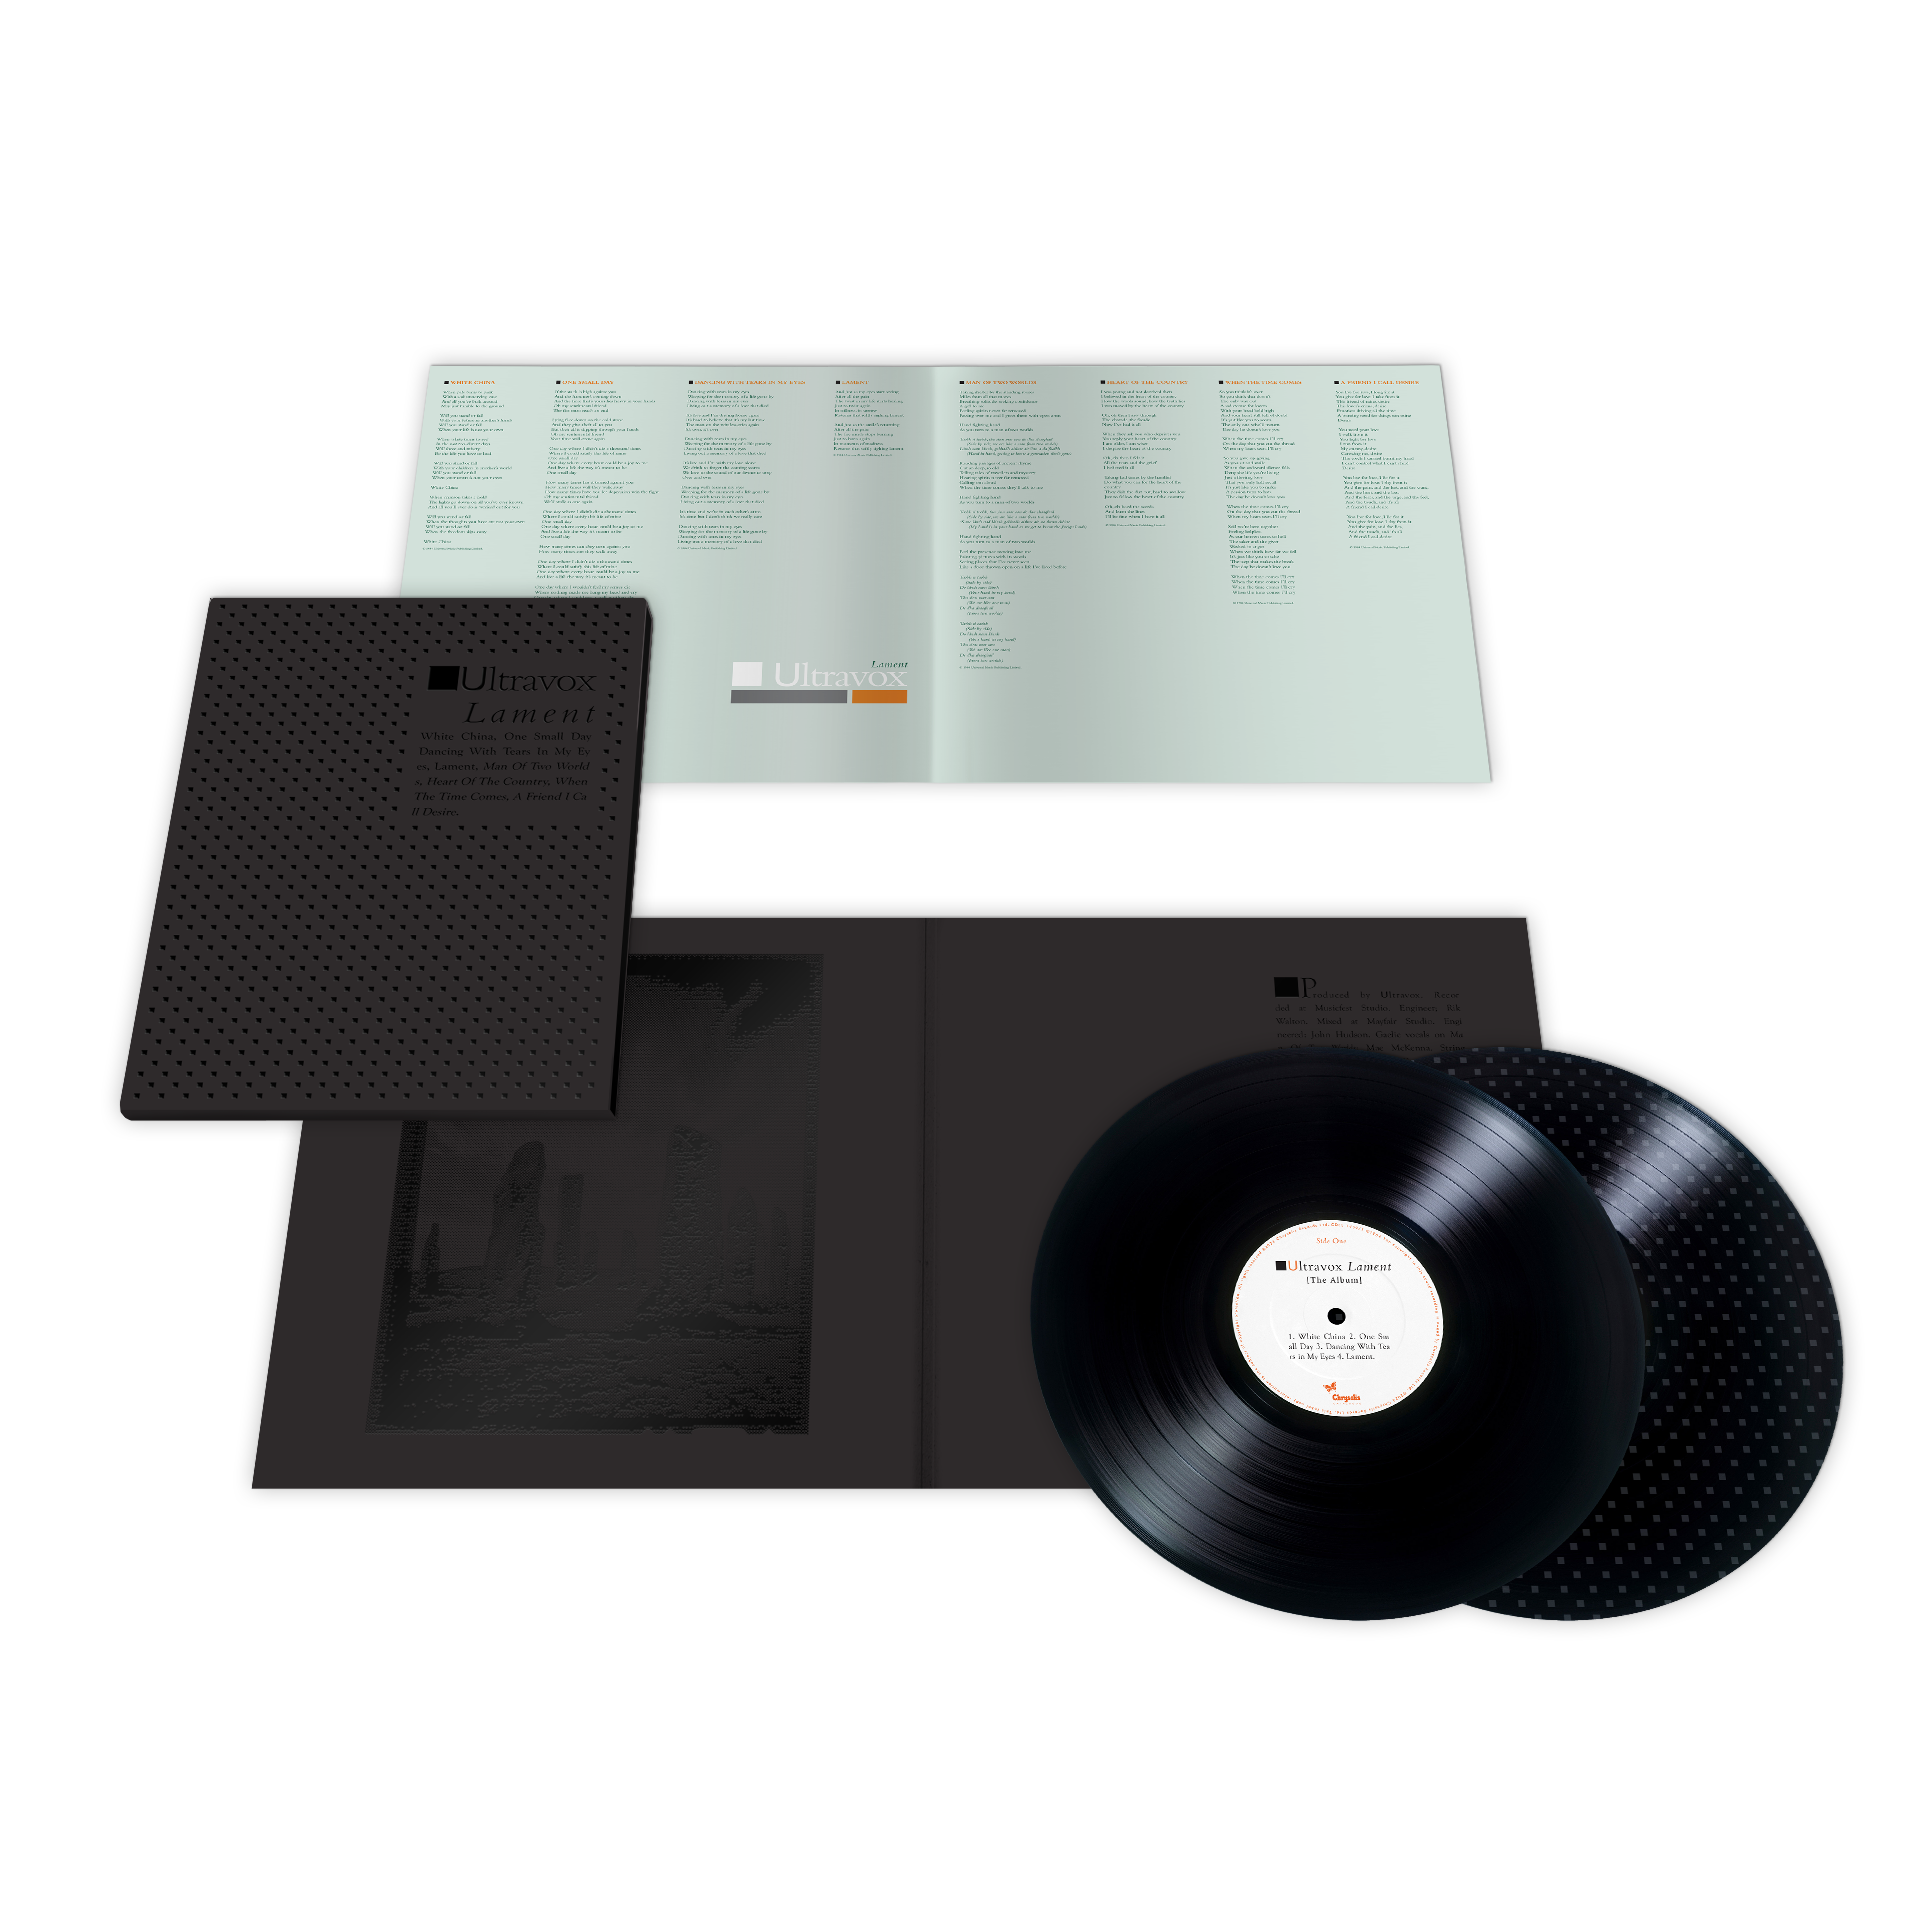 Ultravox - Lament (40th Anniversary Deluxe Edition): Limited Vinyl 2LP